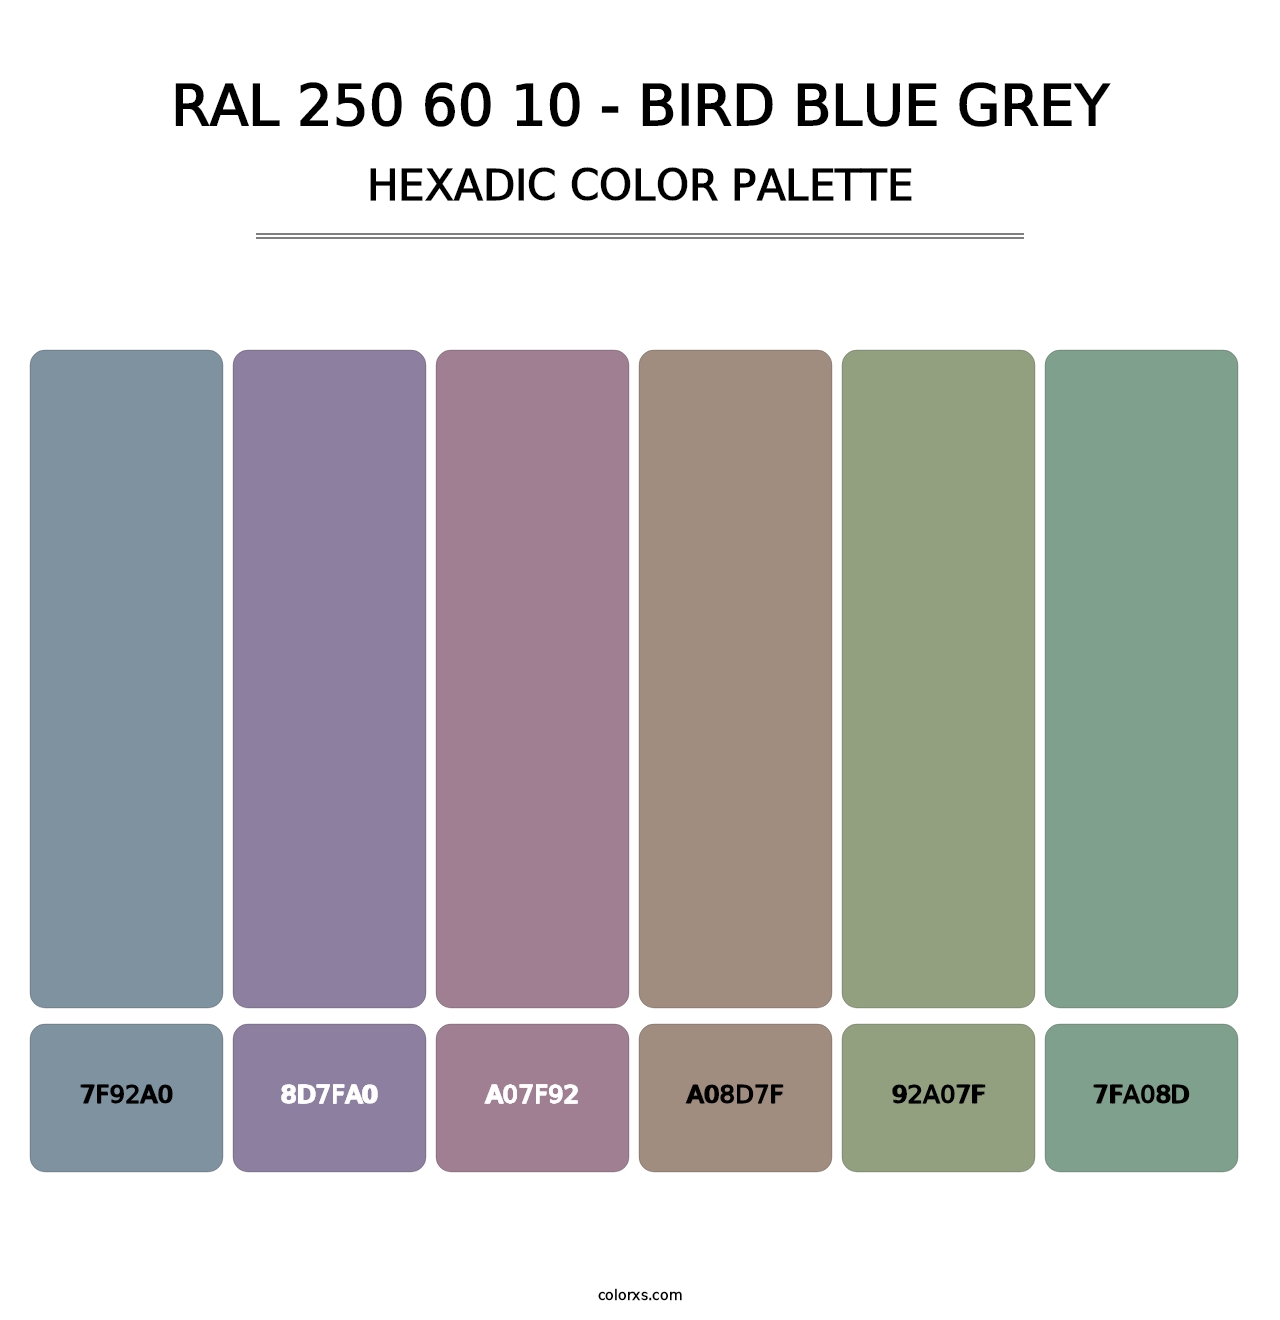 RAL 250 60 10 - Bird Blue Grey - Hexadic Color Palette